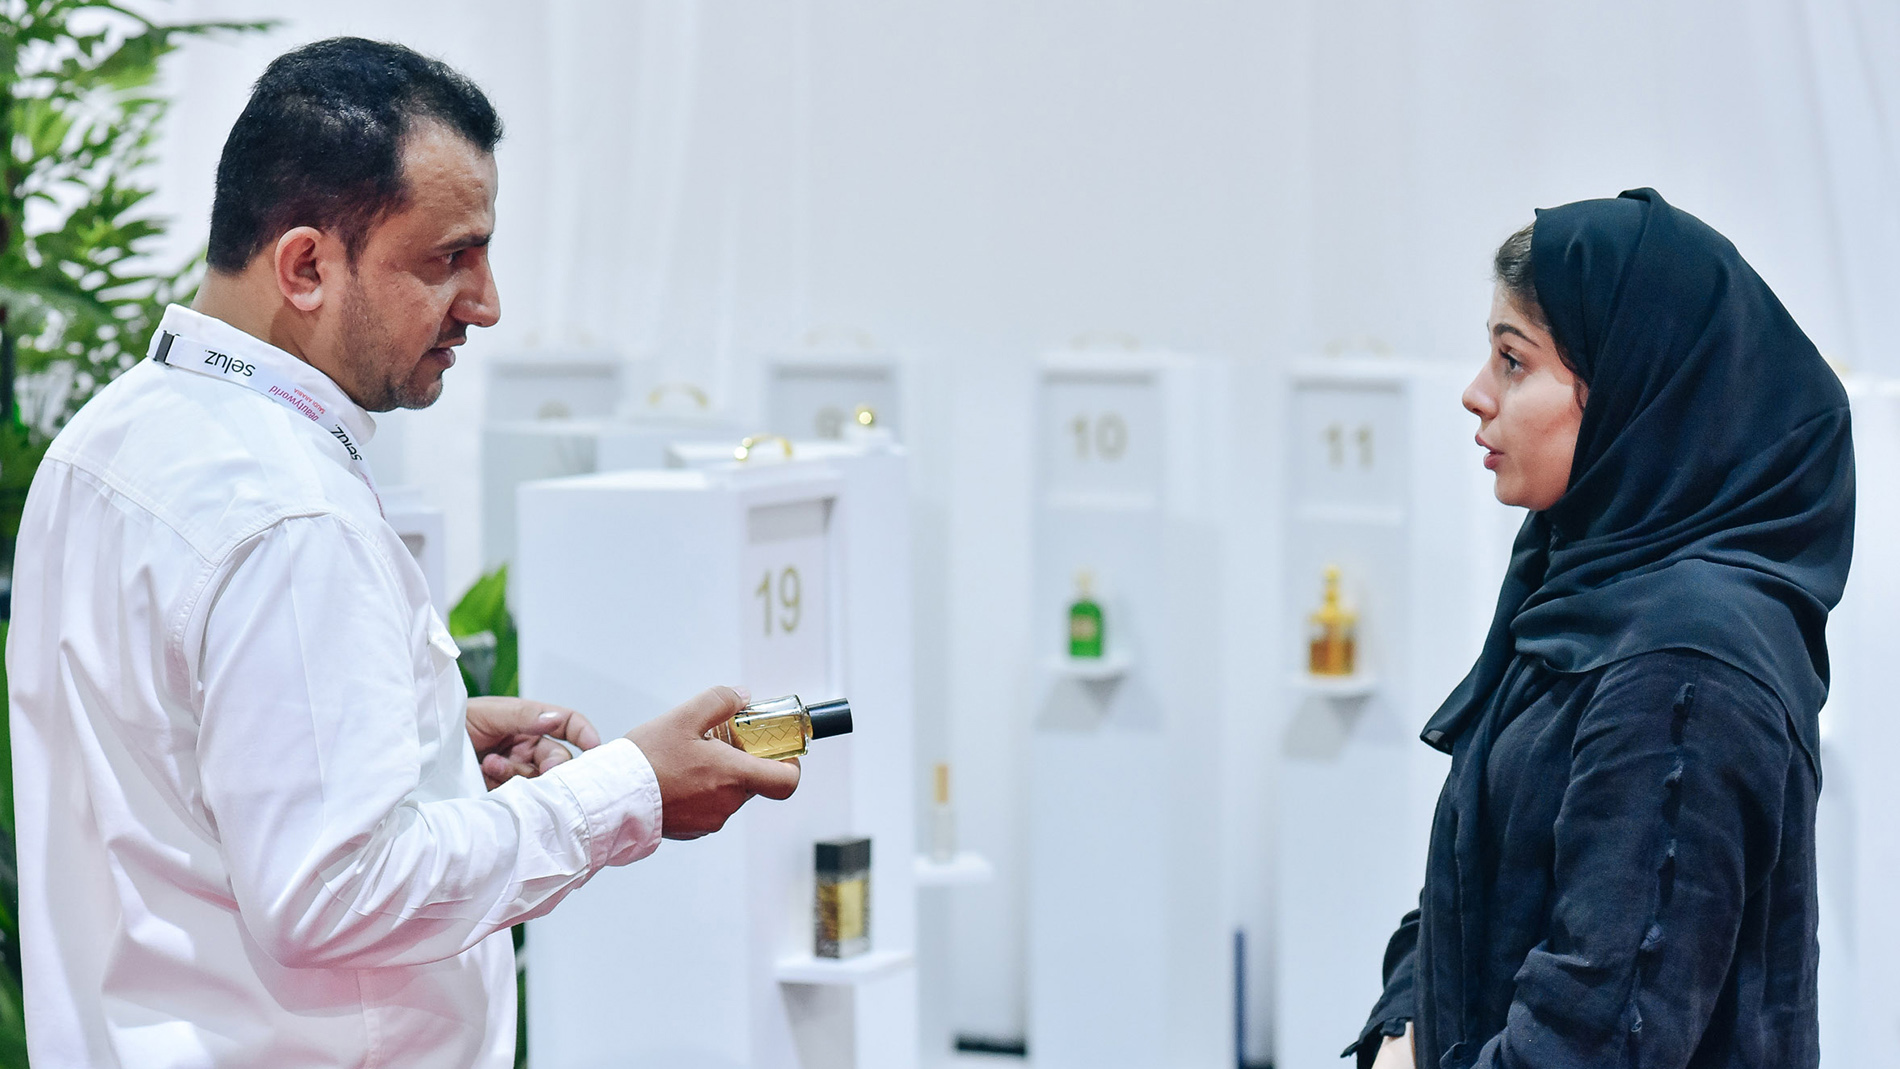 Beautyworld Saudi Arabia - Exhibitor interaction at Fragrance Station